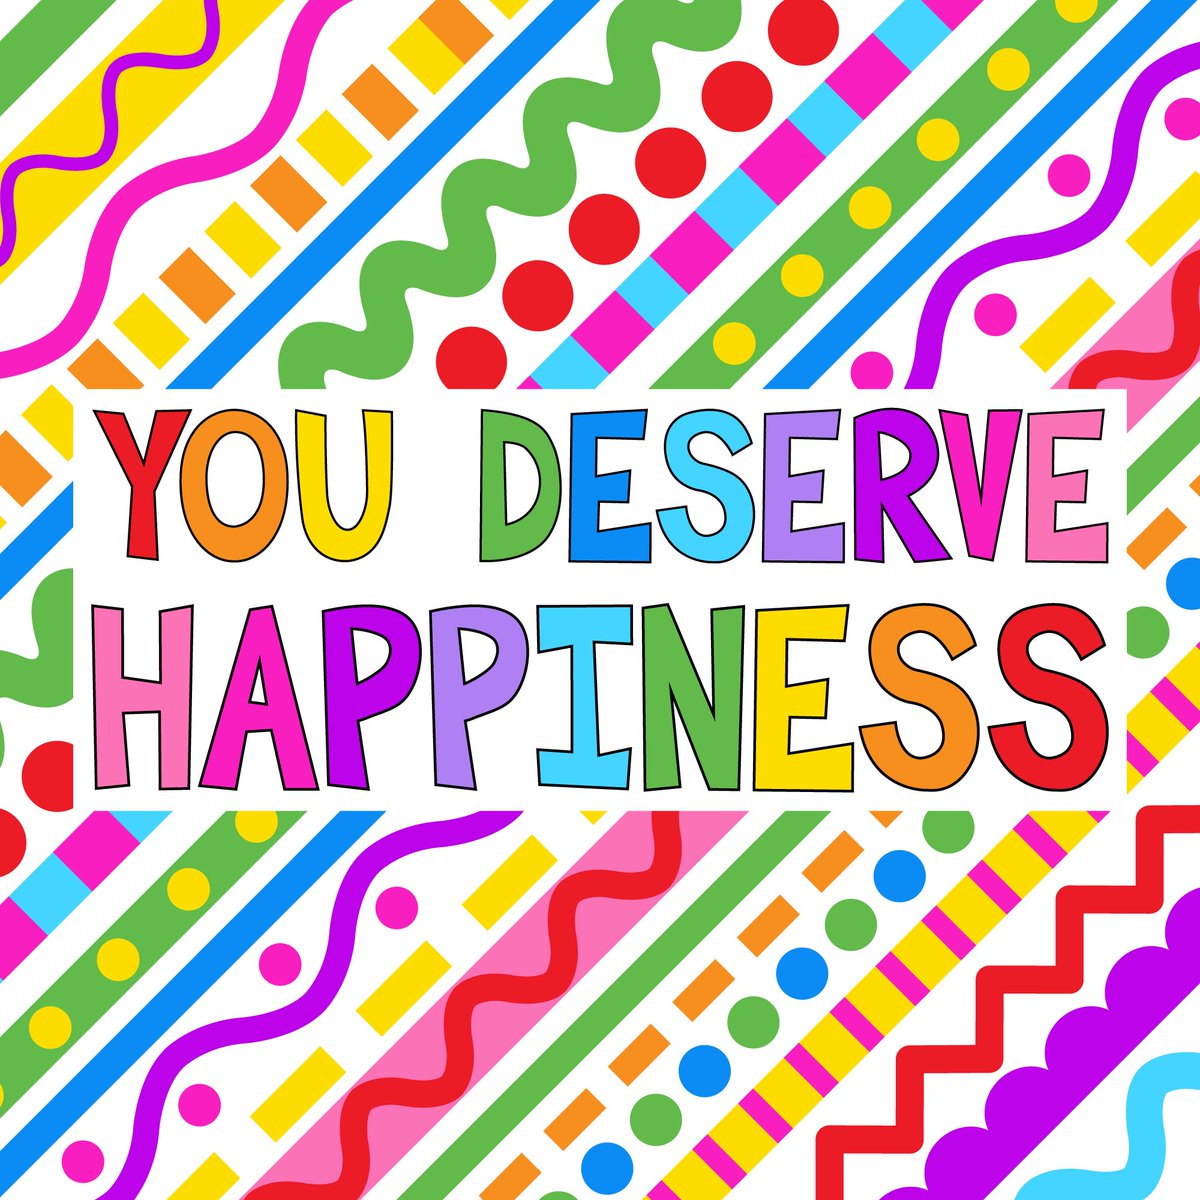 💖💖You Deserve Happiness💖💖

❤️🧡💛💚💙💜💖
#youdeservehappiness #youdeservetobehappy #happinessquote #happinessquotes #stationerydesign #colourfulartwork #positivequotes #encouragementquotes